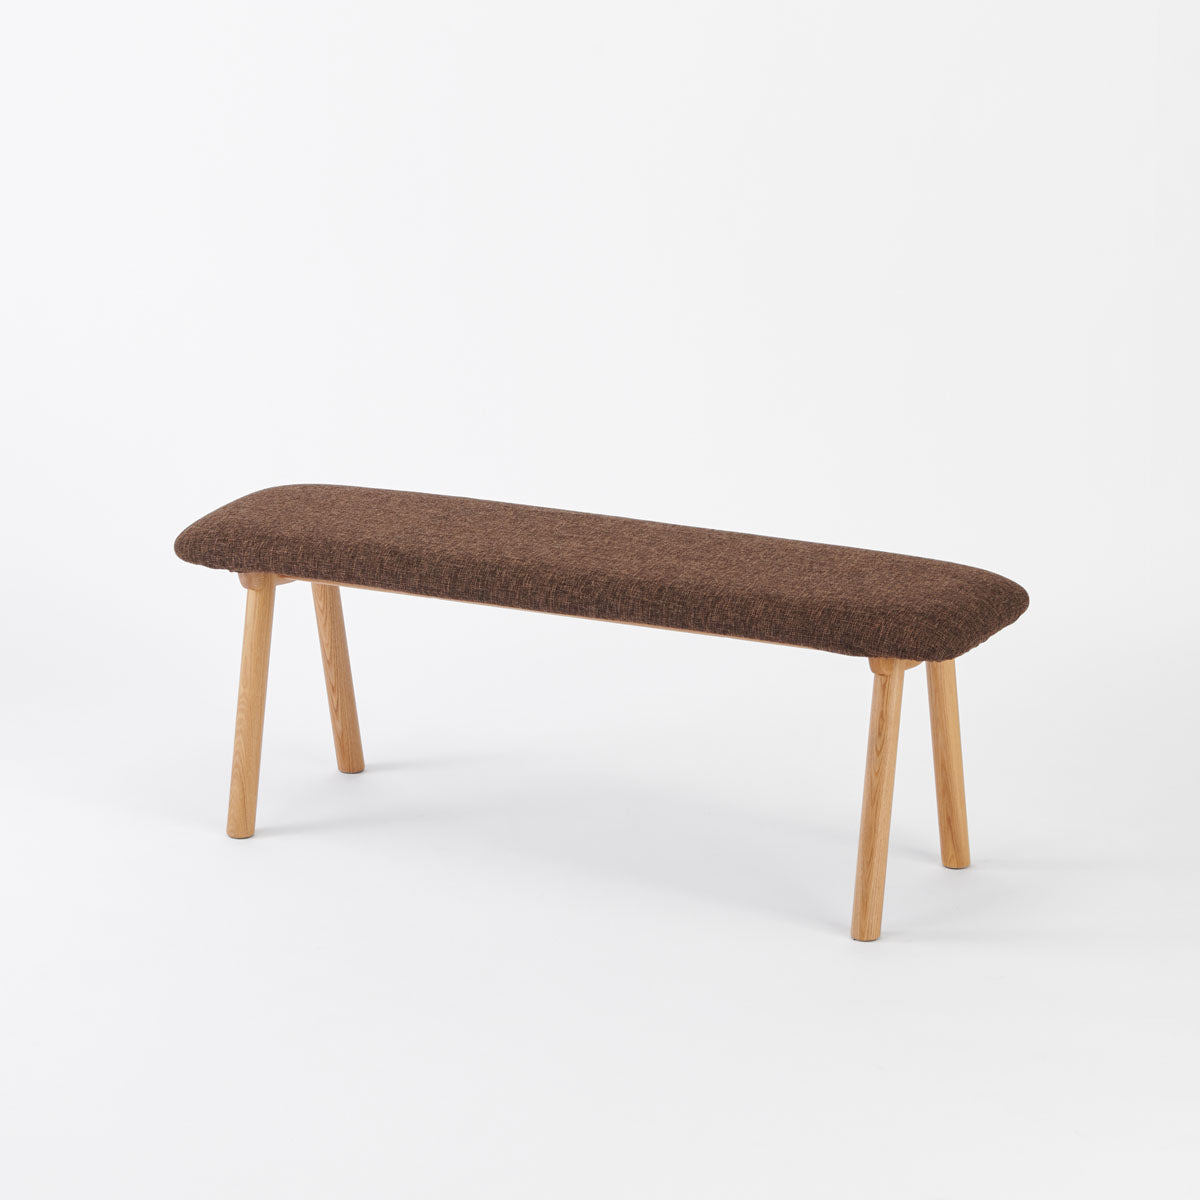 KUUM Bench - Natural Wooden Frame / クーム ベンチブラウン